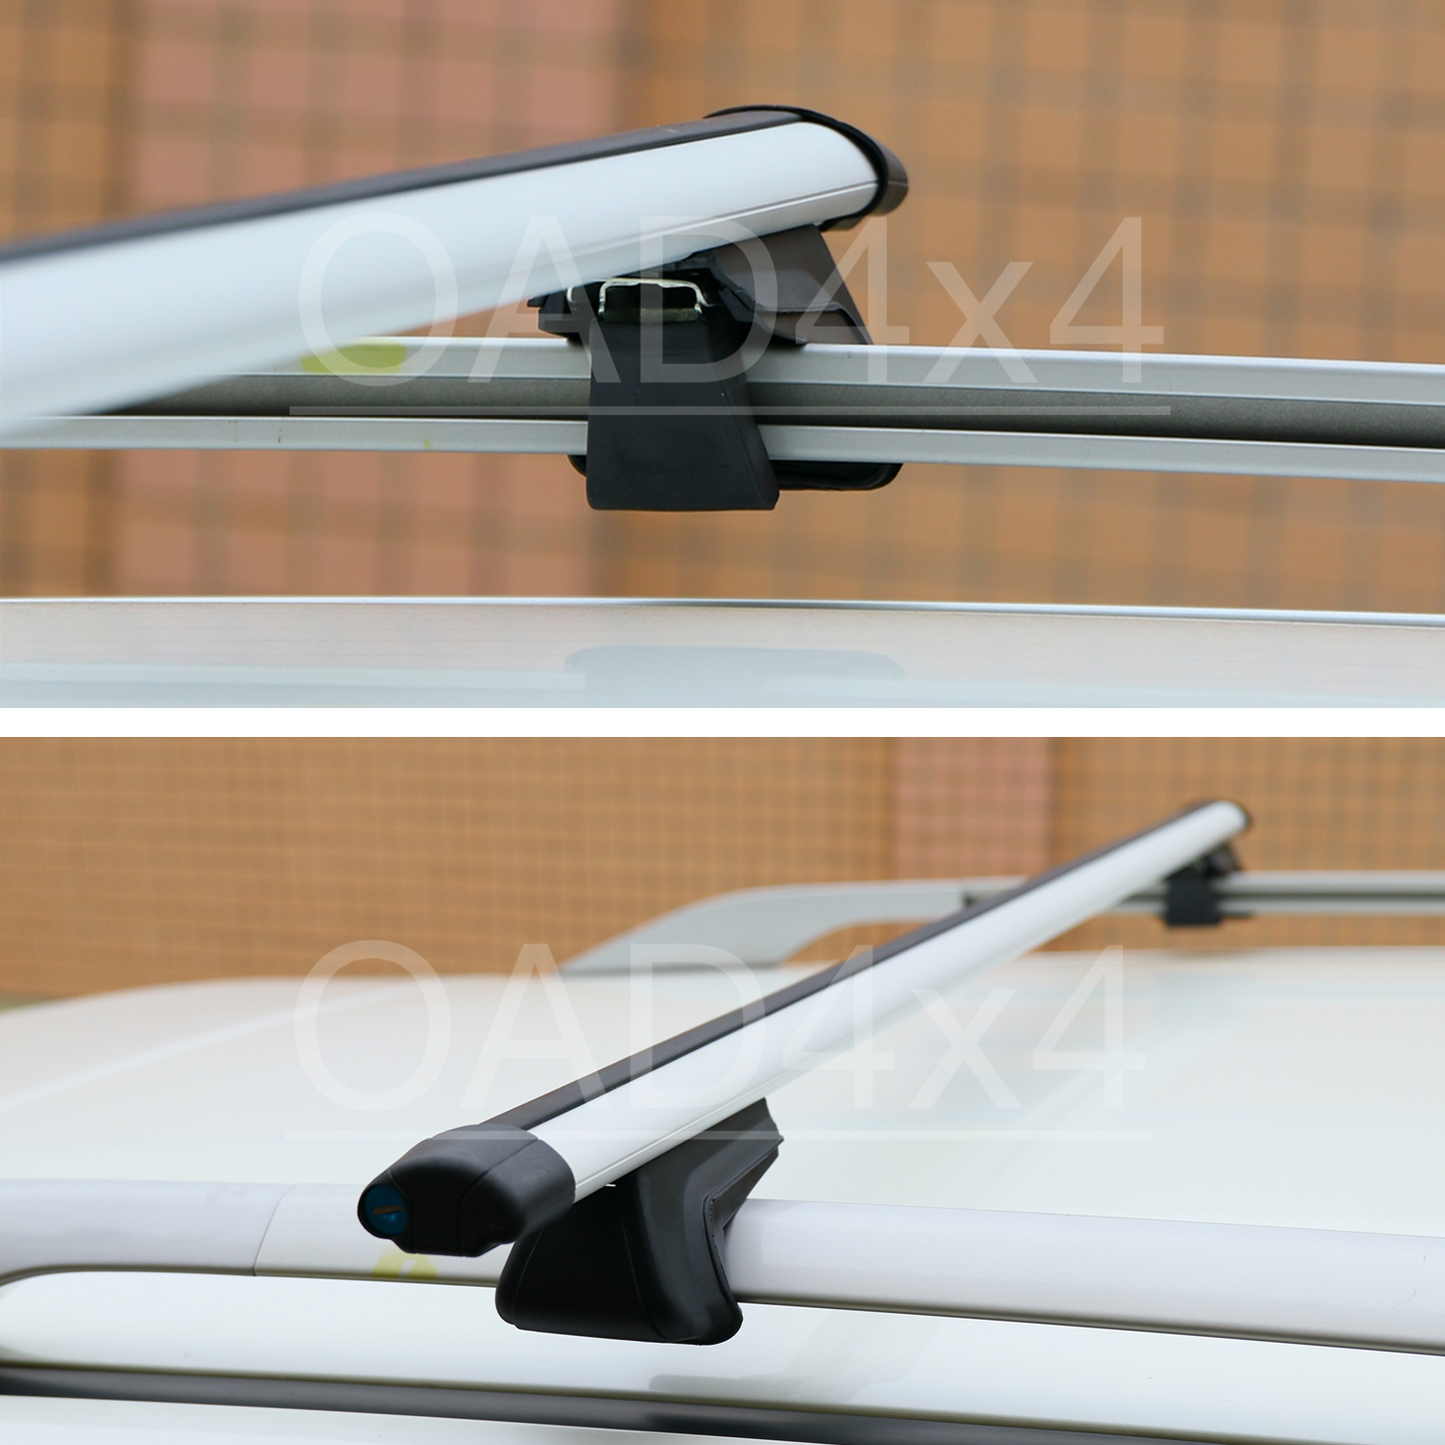 1 Pair Aluminum Silver Cross Bar Roof Racks Baggage holder for Renault Koleos 08-16 with raised roof rail